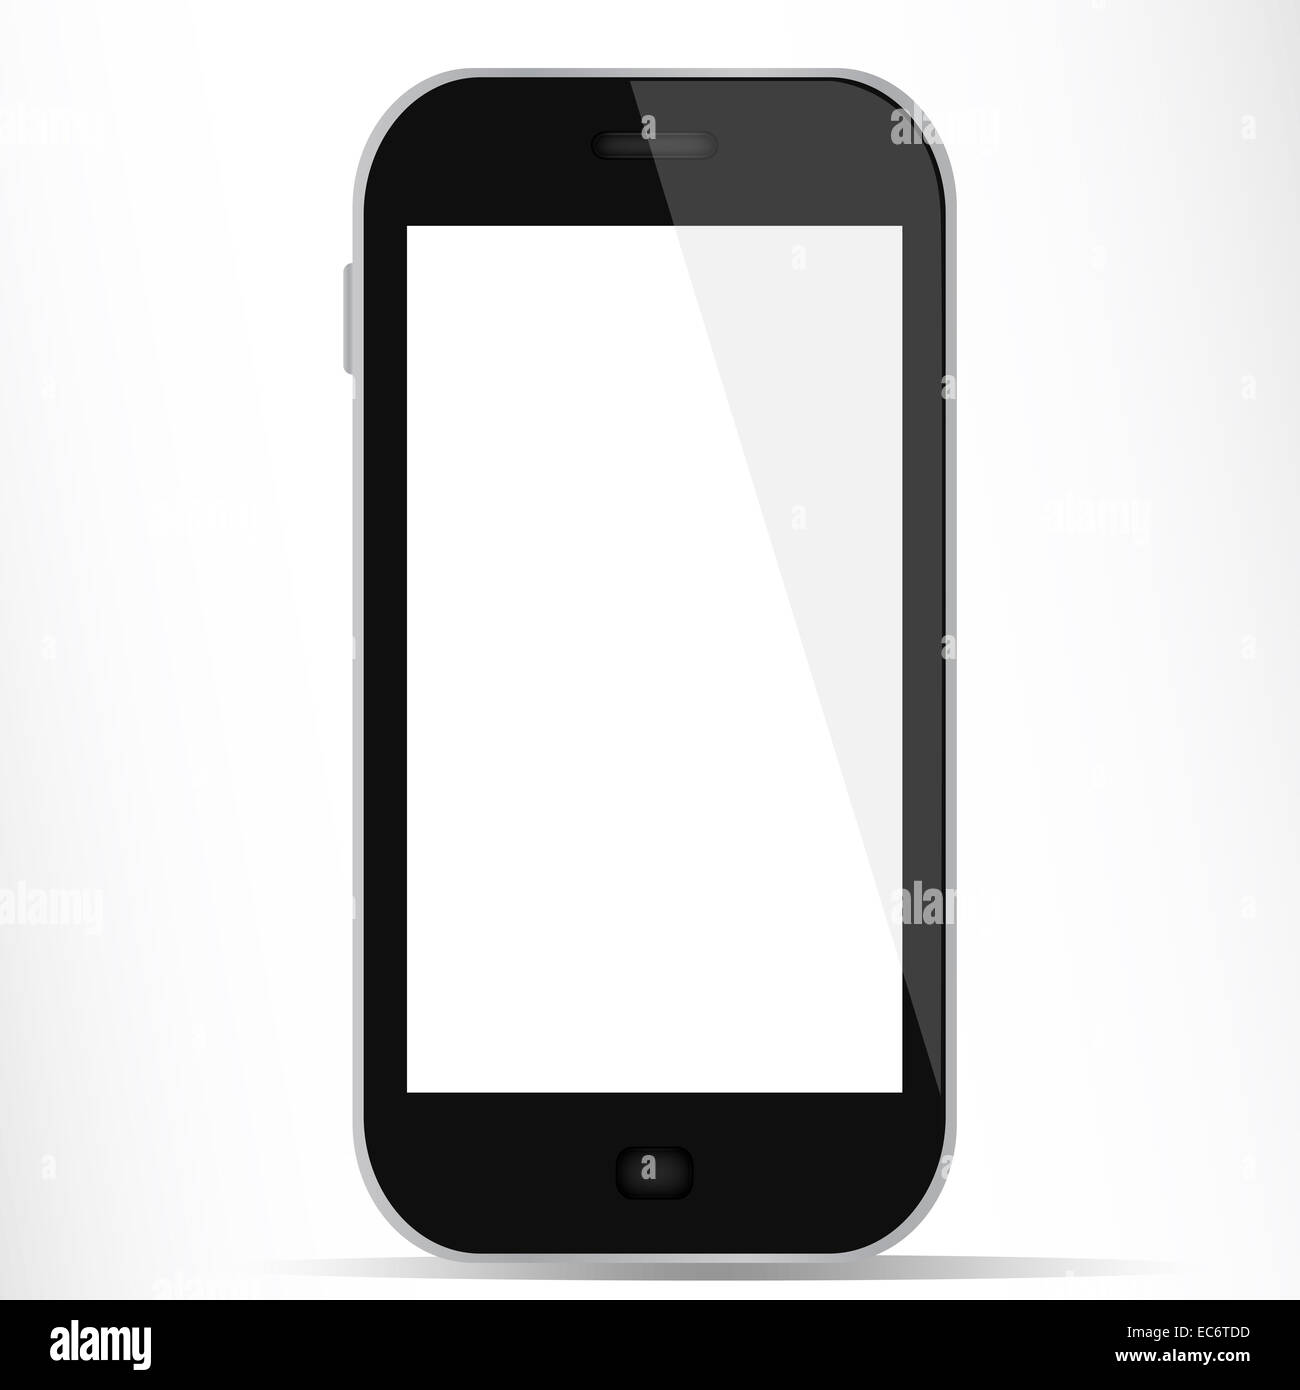 Generic smart phone with white display Stock Photo